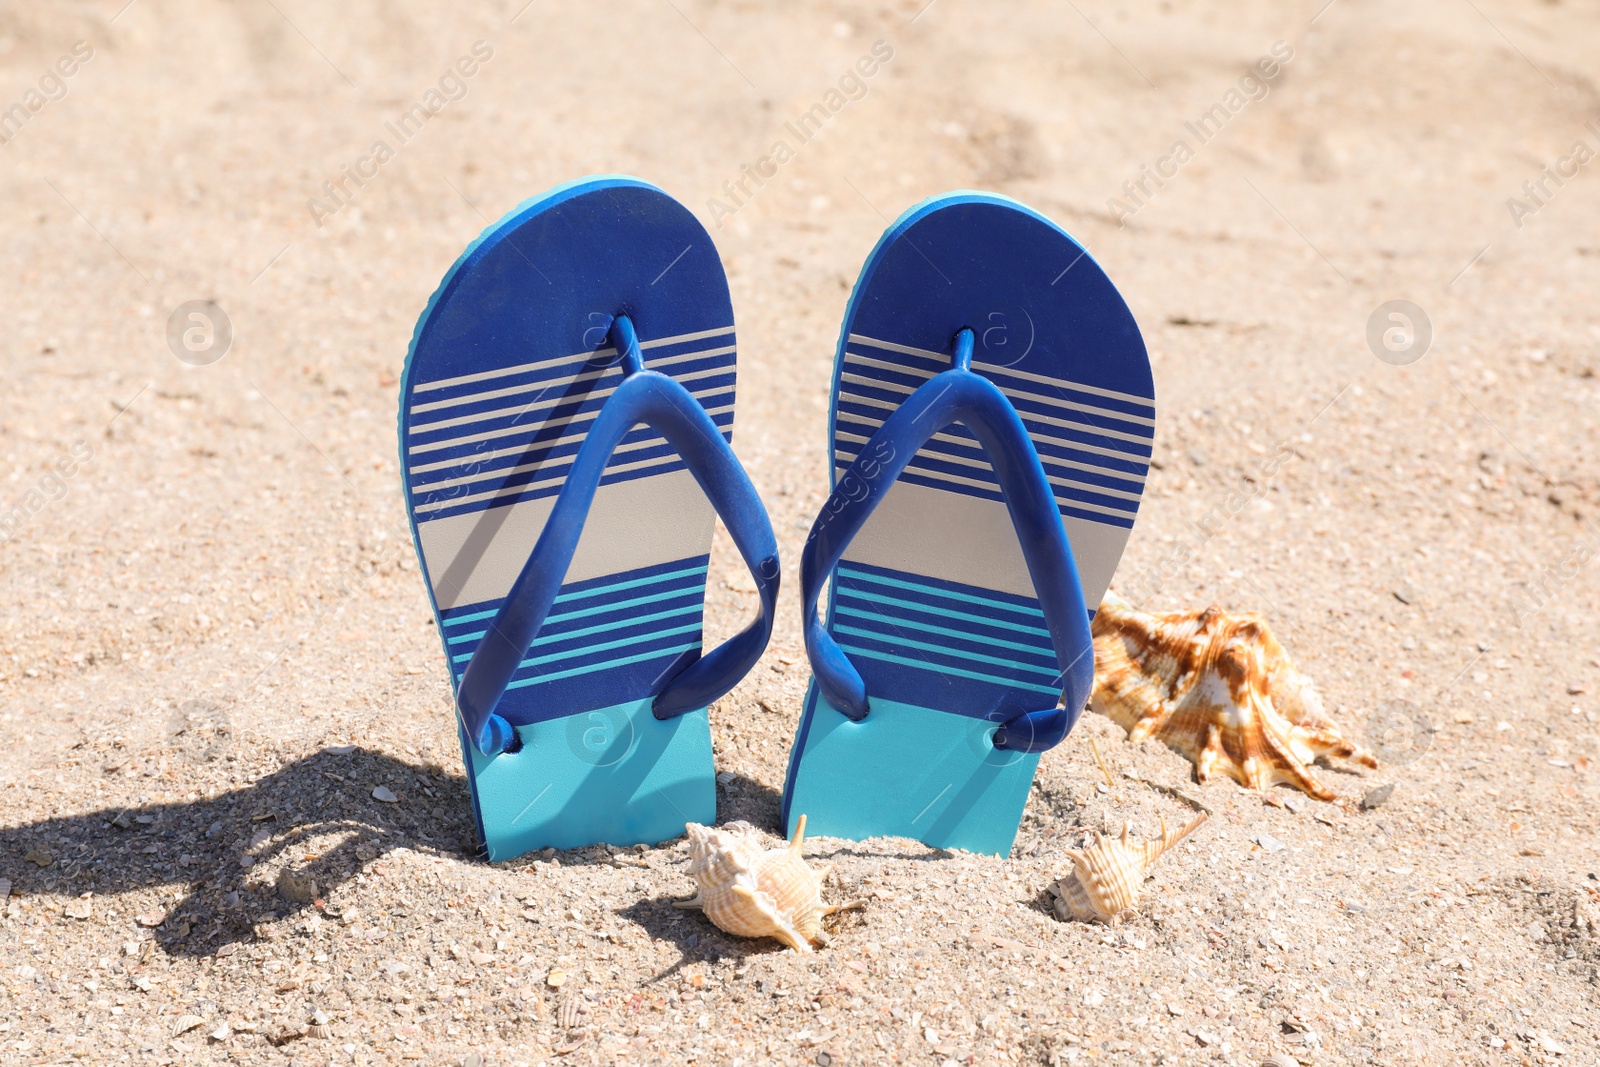 Photo of Stylish flip flops and seashells on sand